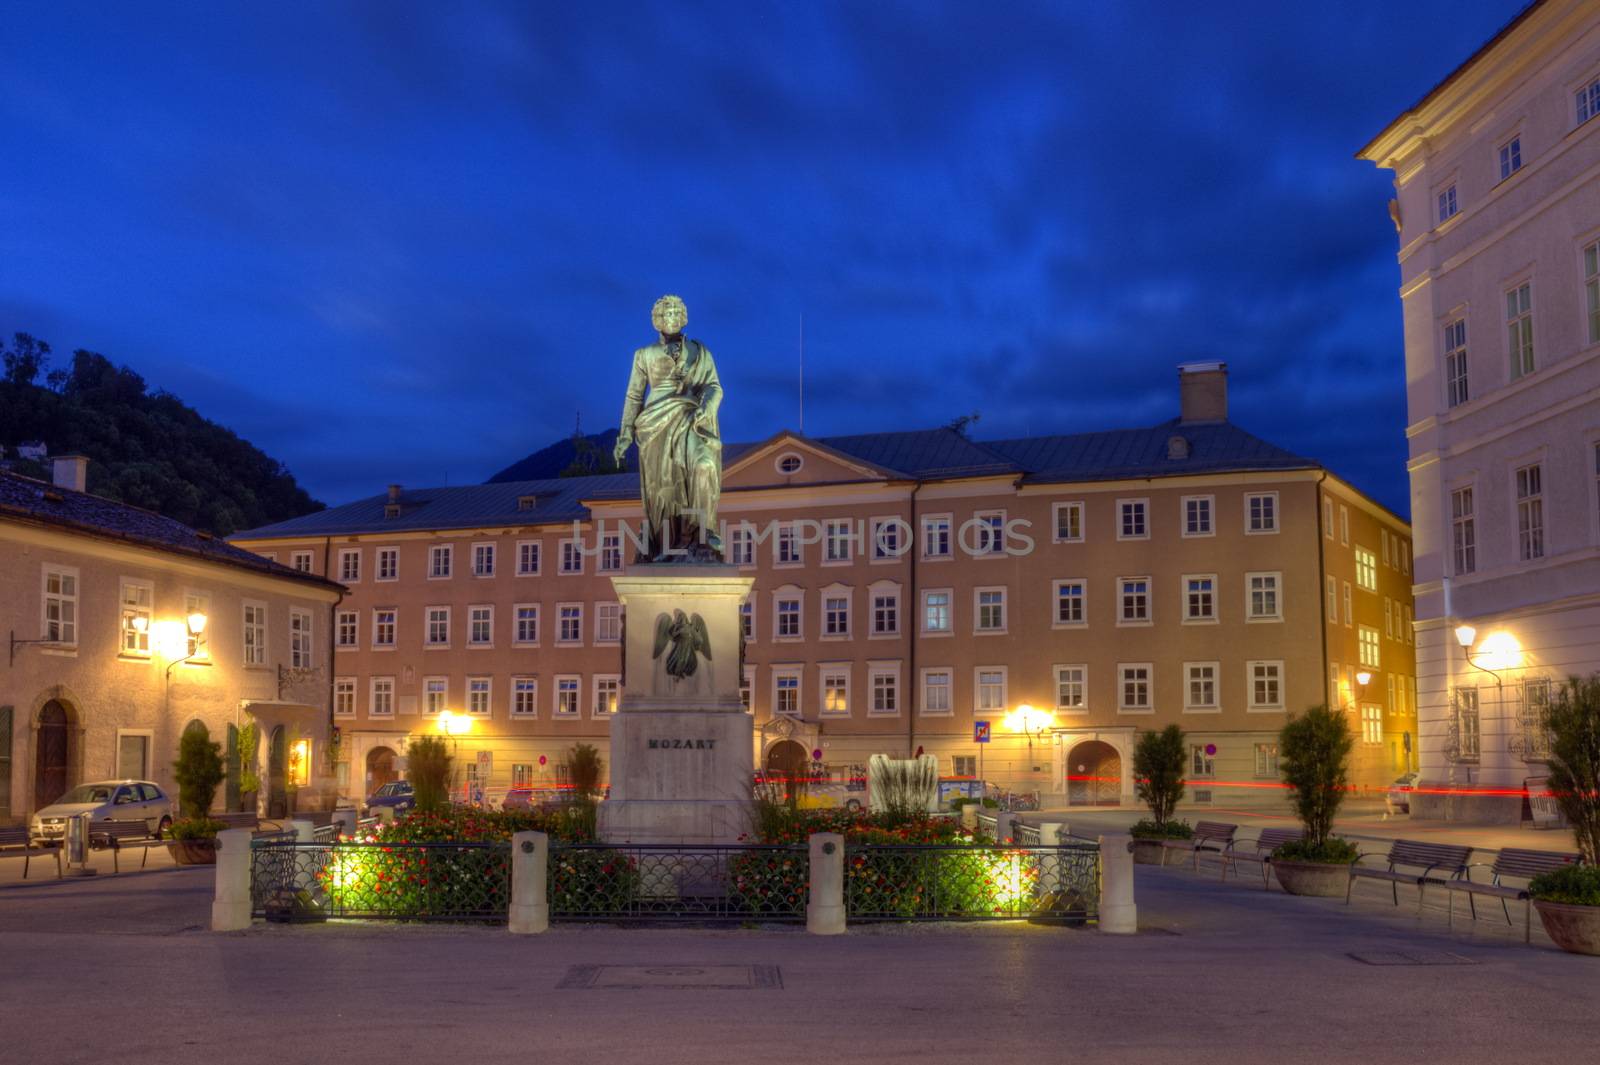 Mozart statue in Mozartplatz, Salzburg, Austria by Elenaphotos21